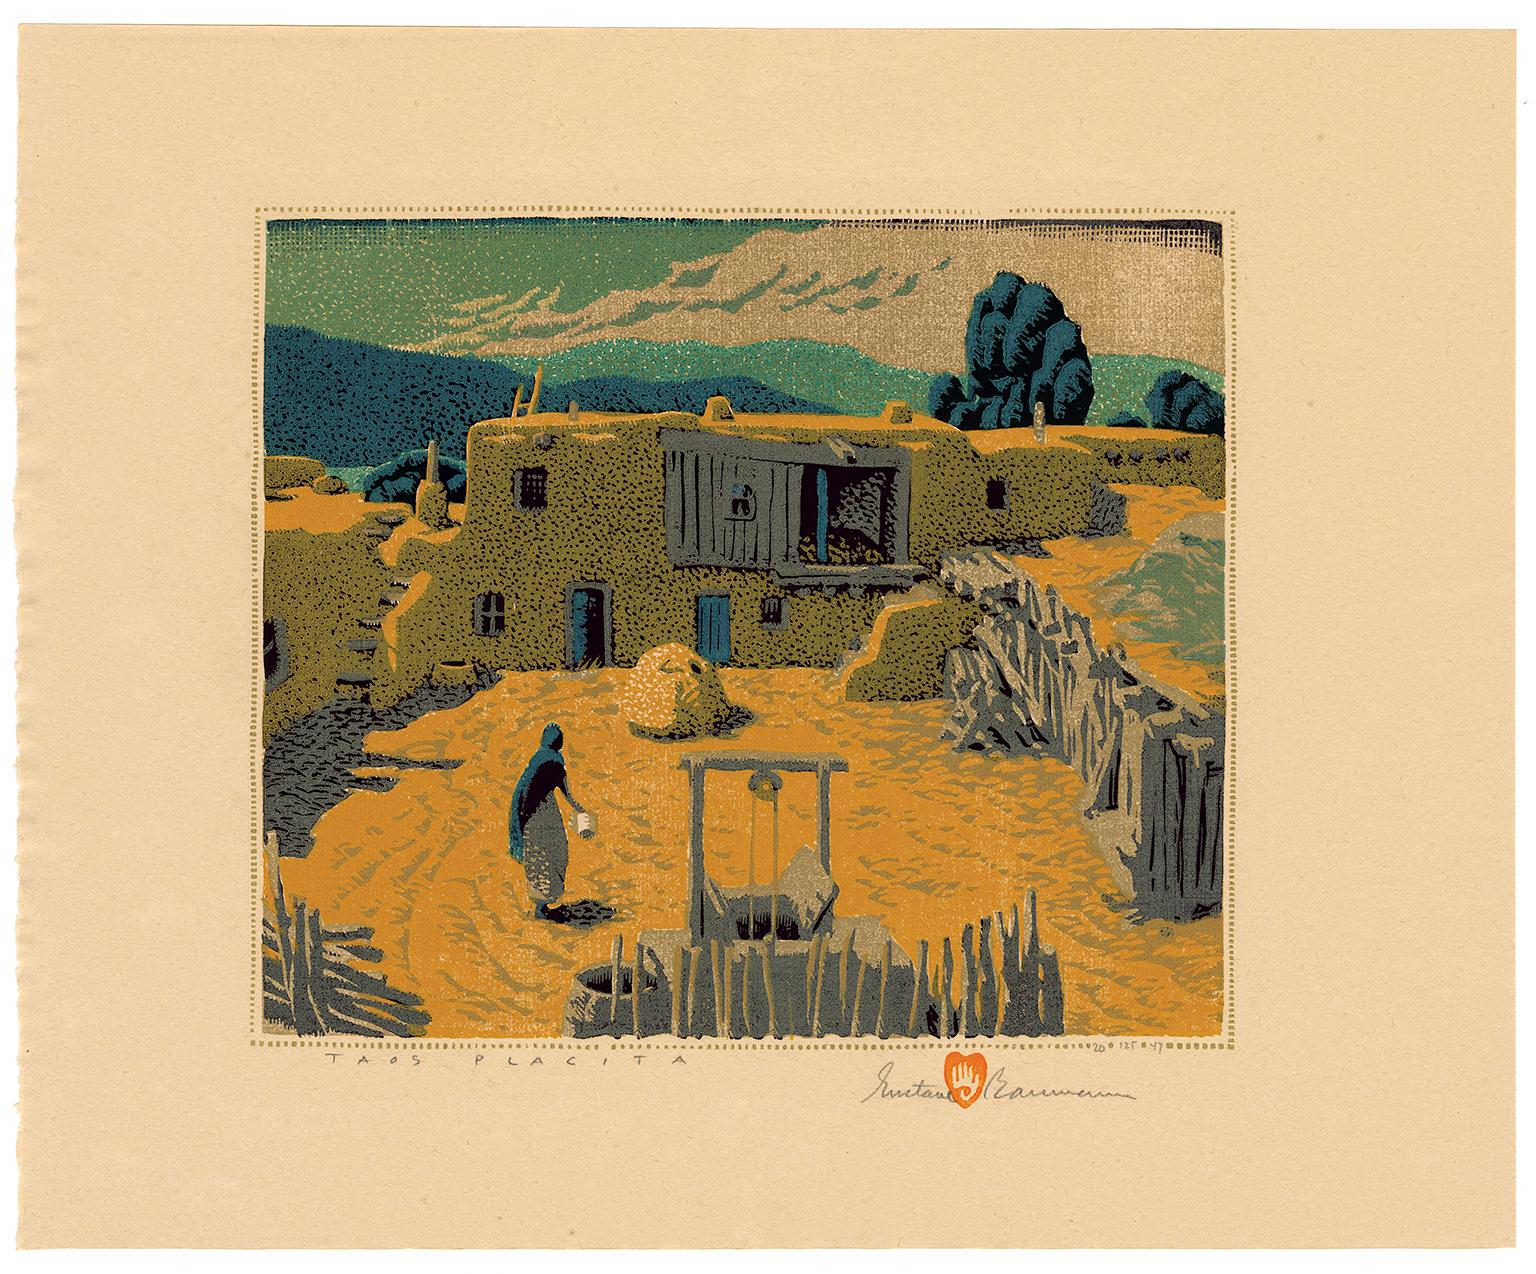 'Taos Placita' — 1940s Southwest Regionalism - Print by Gustave Baumann